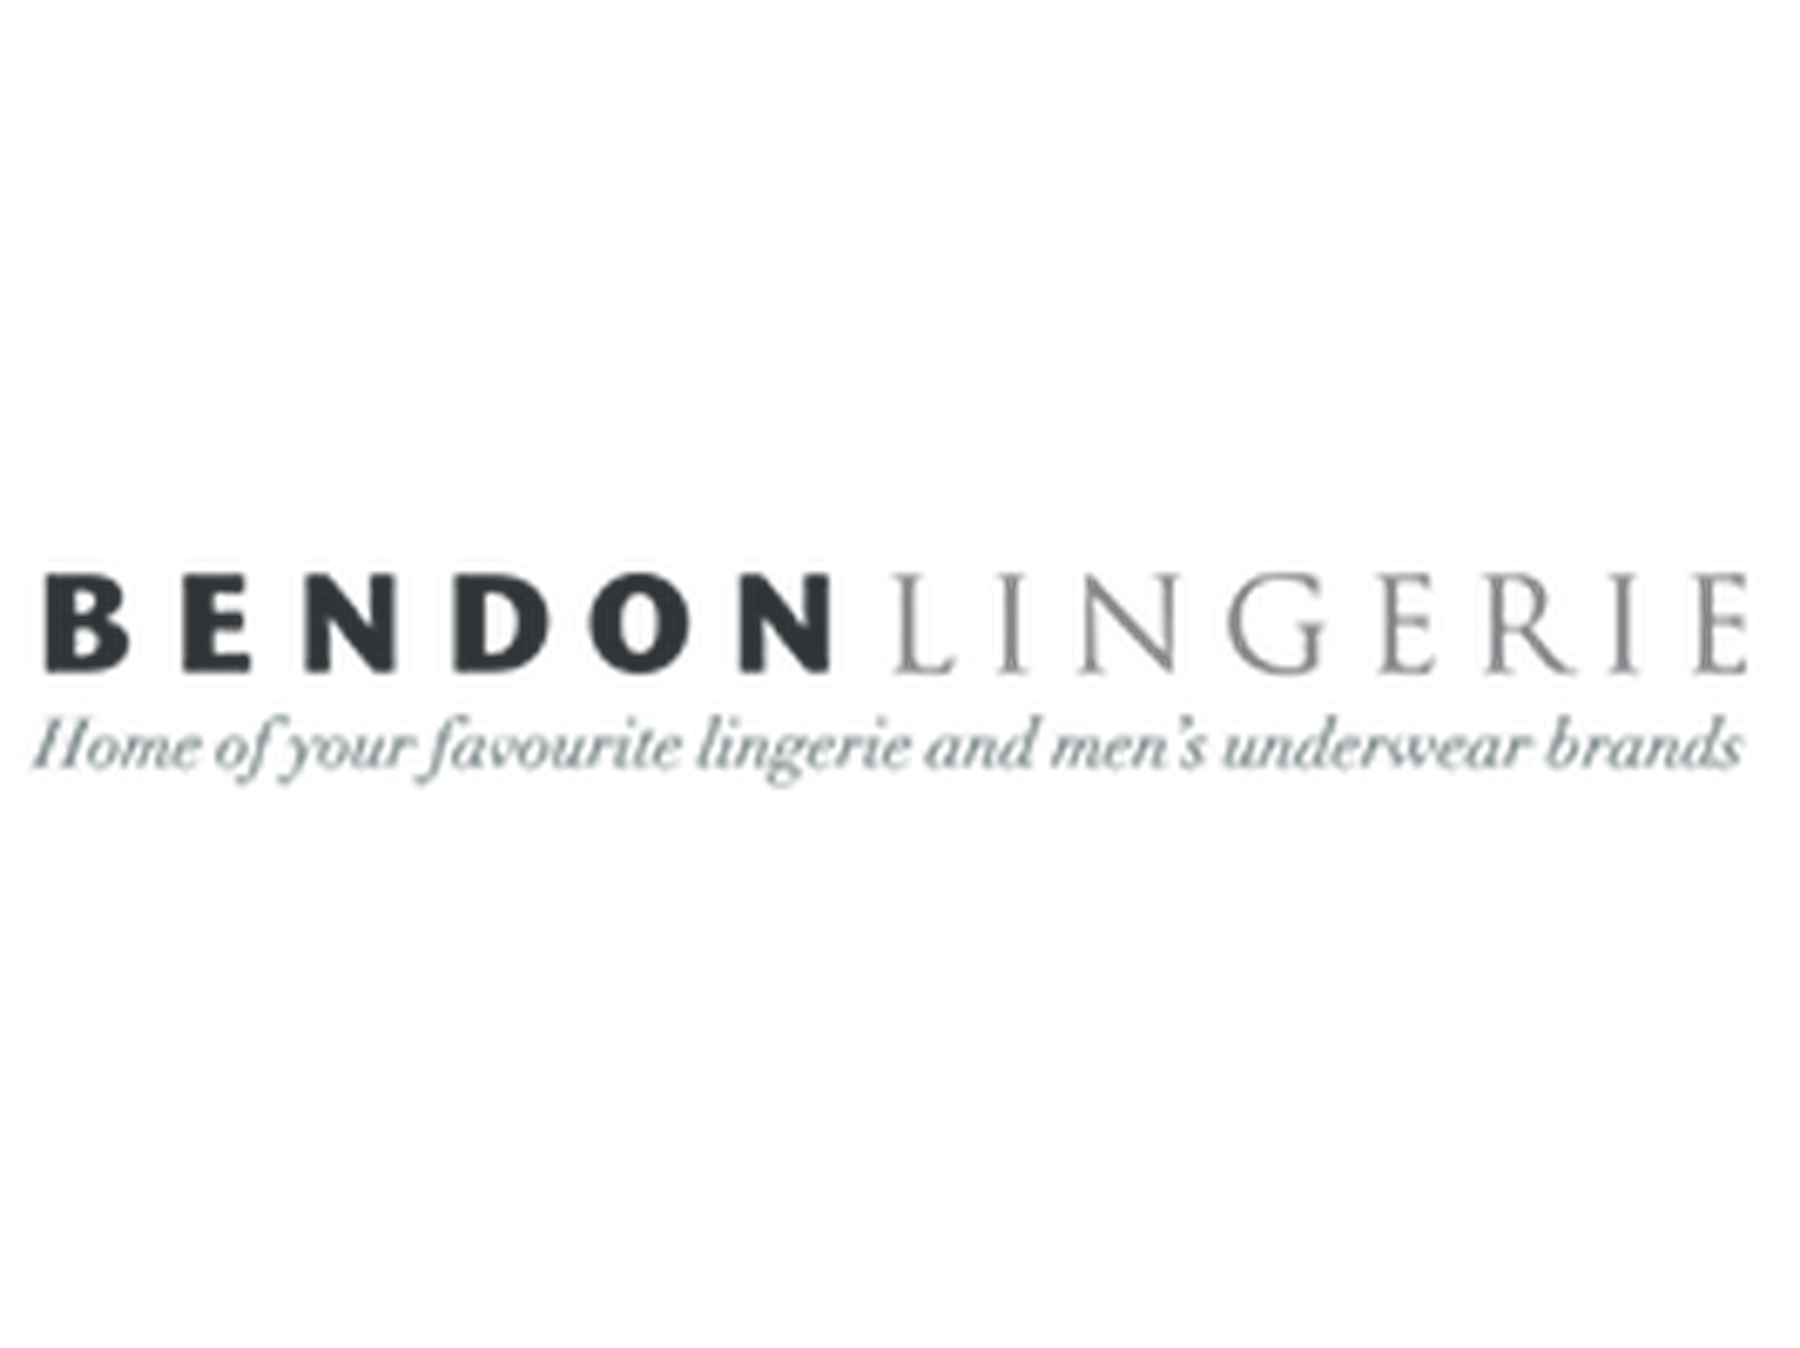 Bendon Lingerie Promo Code